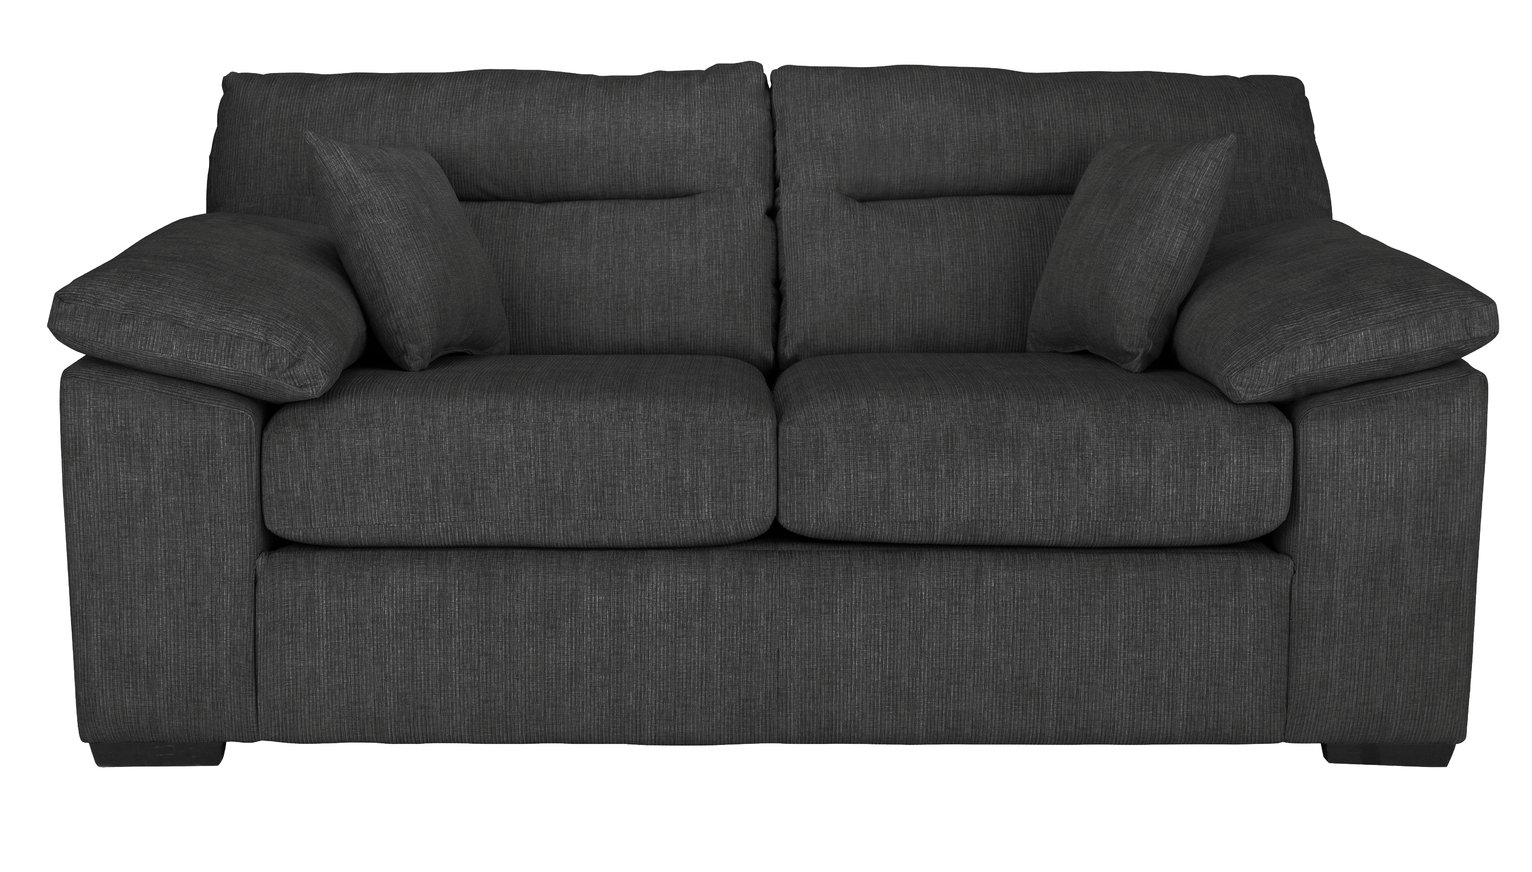 Argos Home Donavan 2 Seater Fabric Sofa Bed - Charcoal